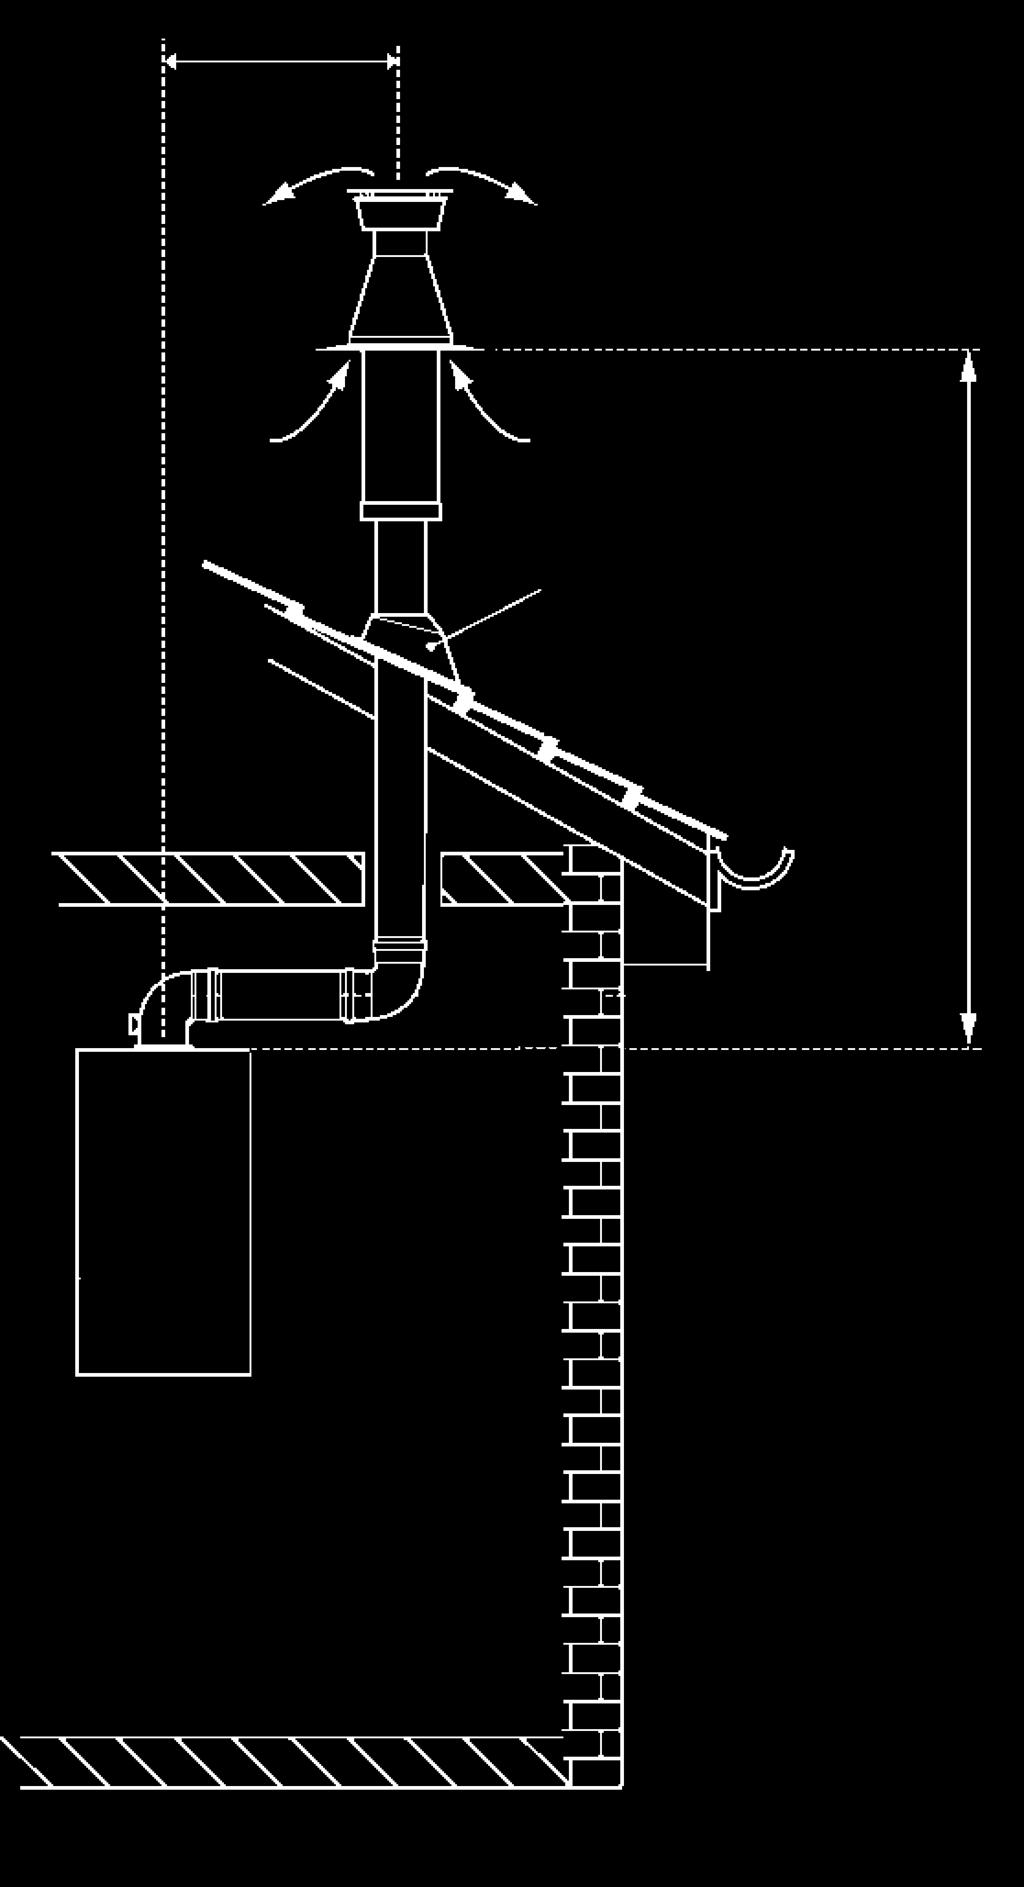 2.5.1 3a KIT A HORIZONTAL WALL TERMINAL (C13) - PART NO. 956083 Standard concentric (ø100/60) vertical flue application, Figures 3b, 3c, through roof attics with a maximum length of 12000mm.